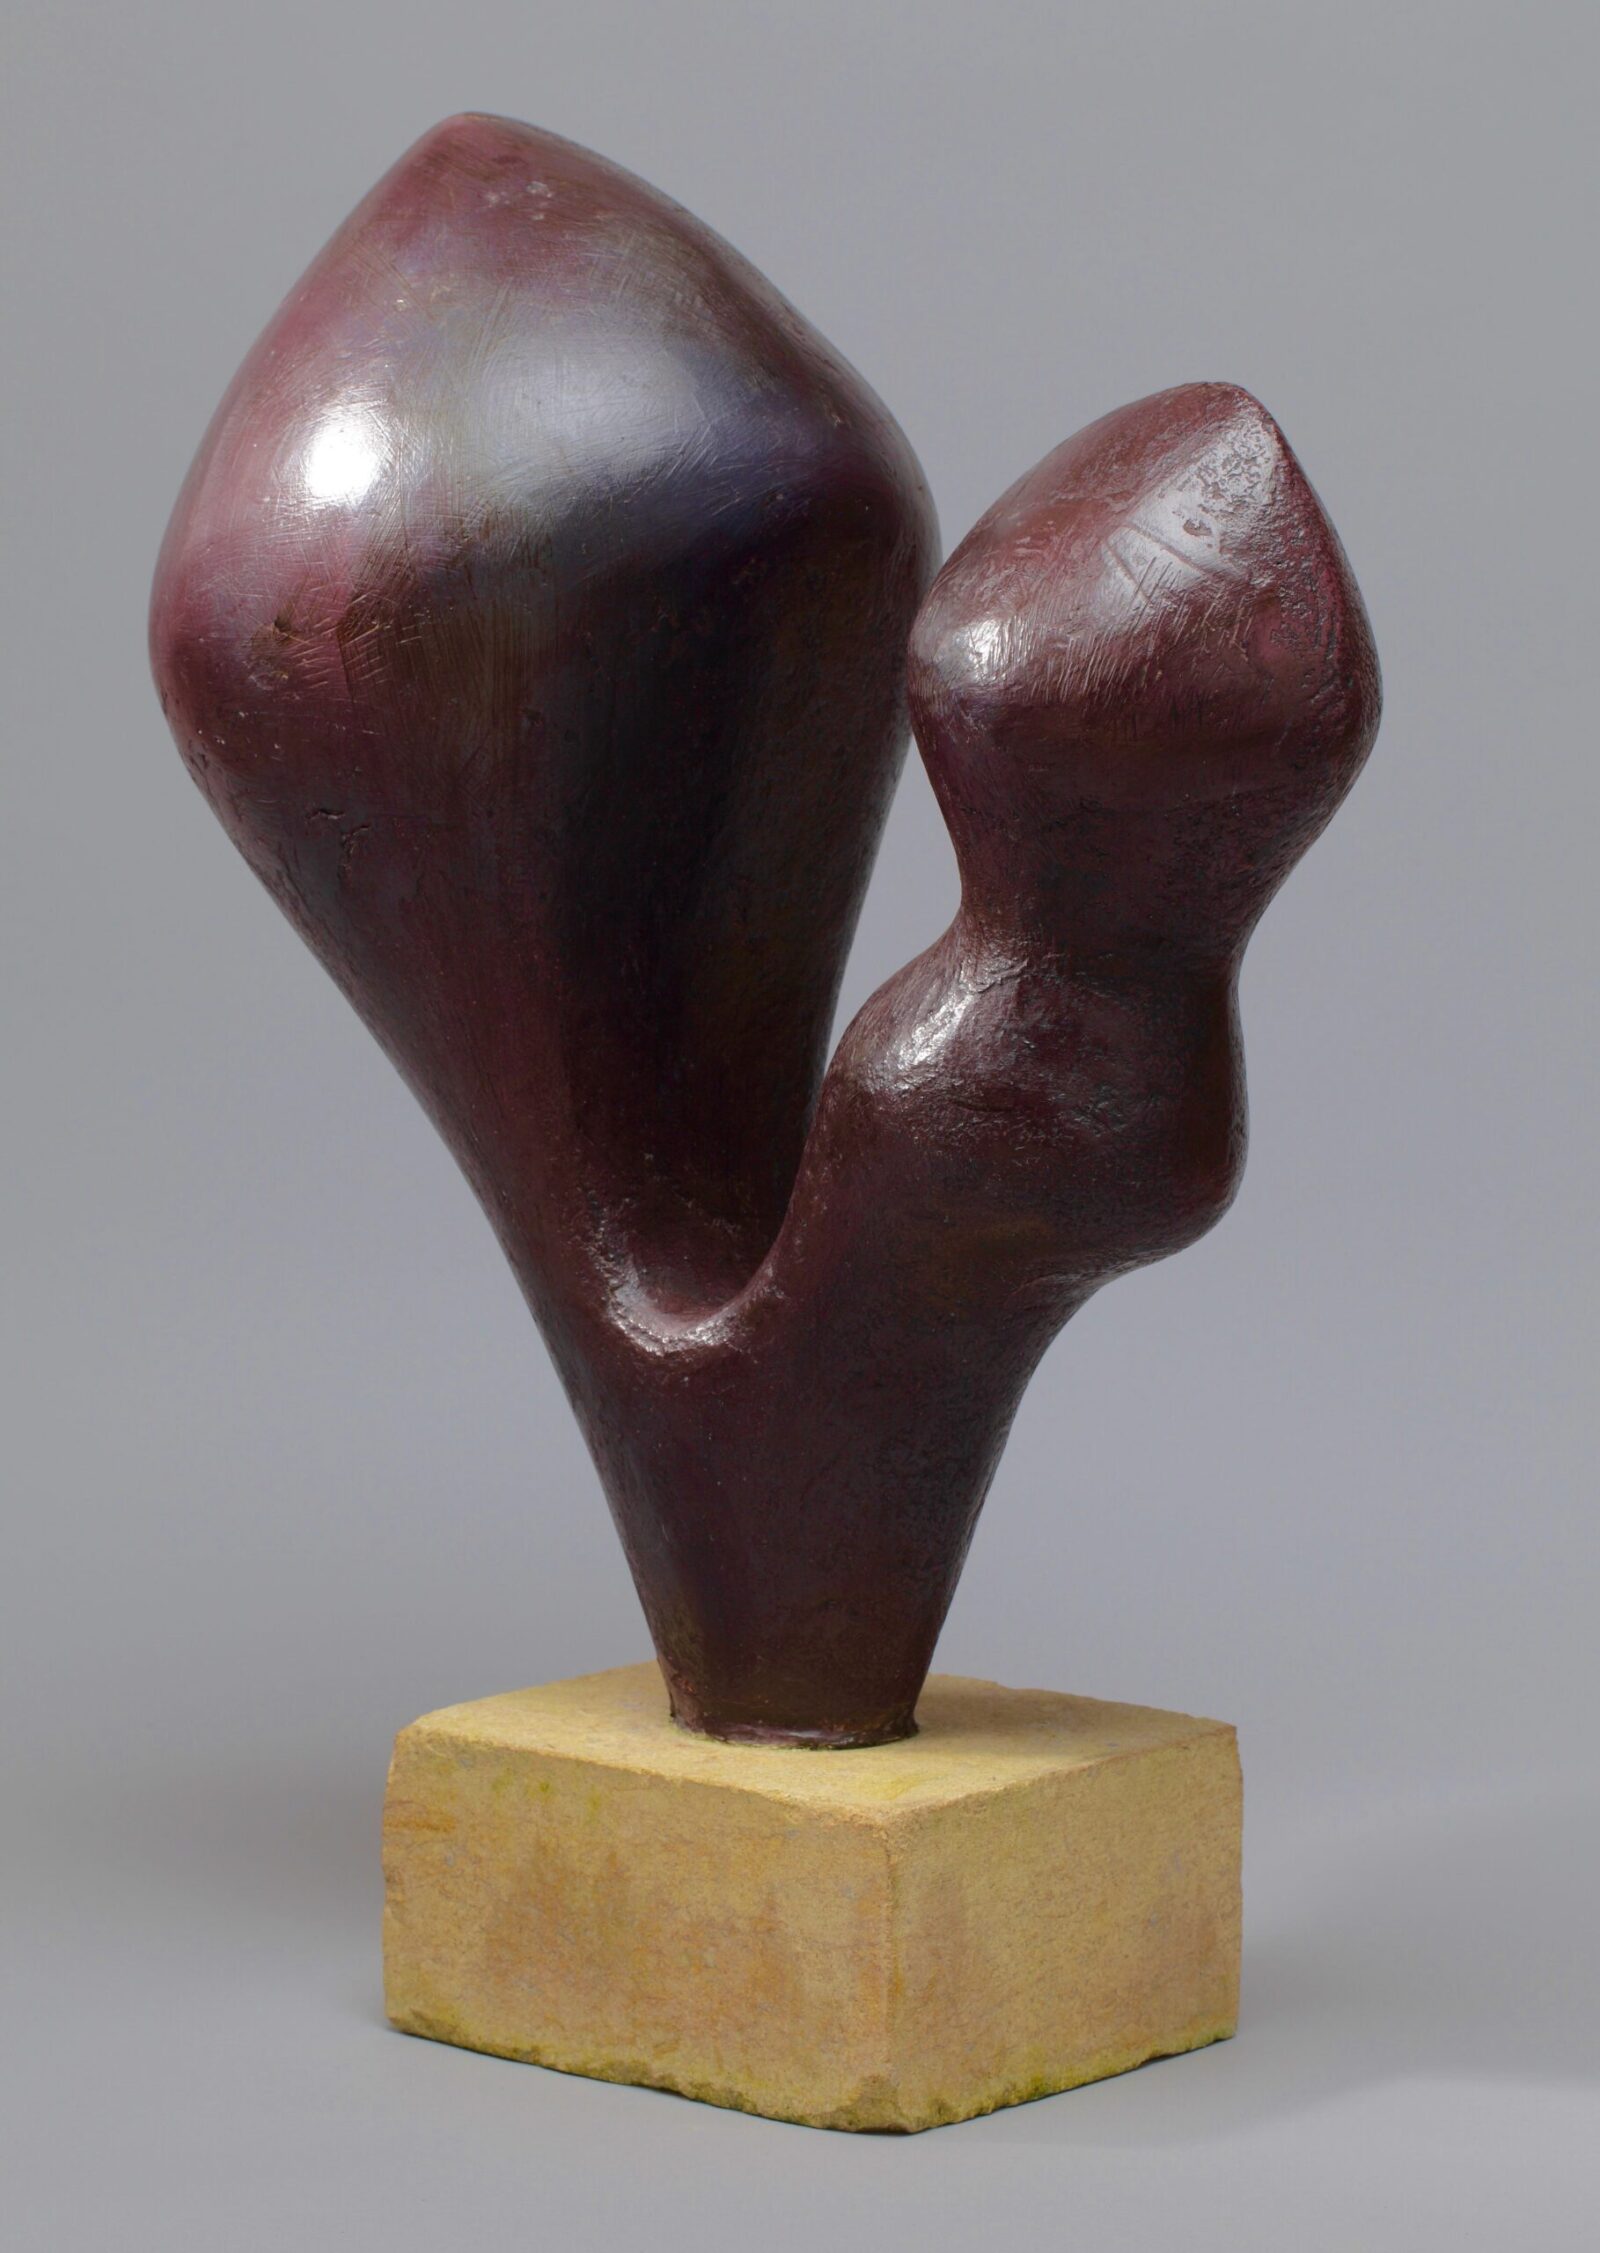 abstract organic ceramic sculpture